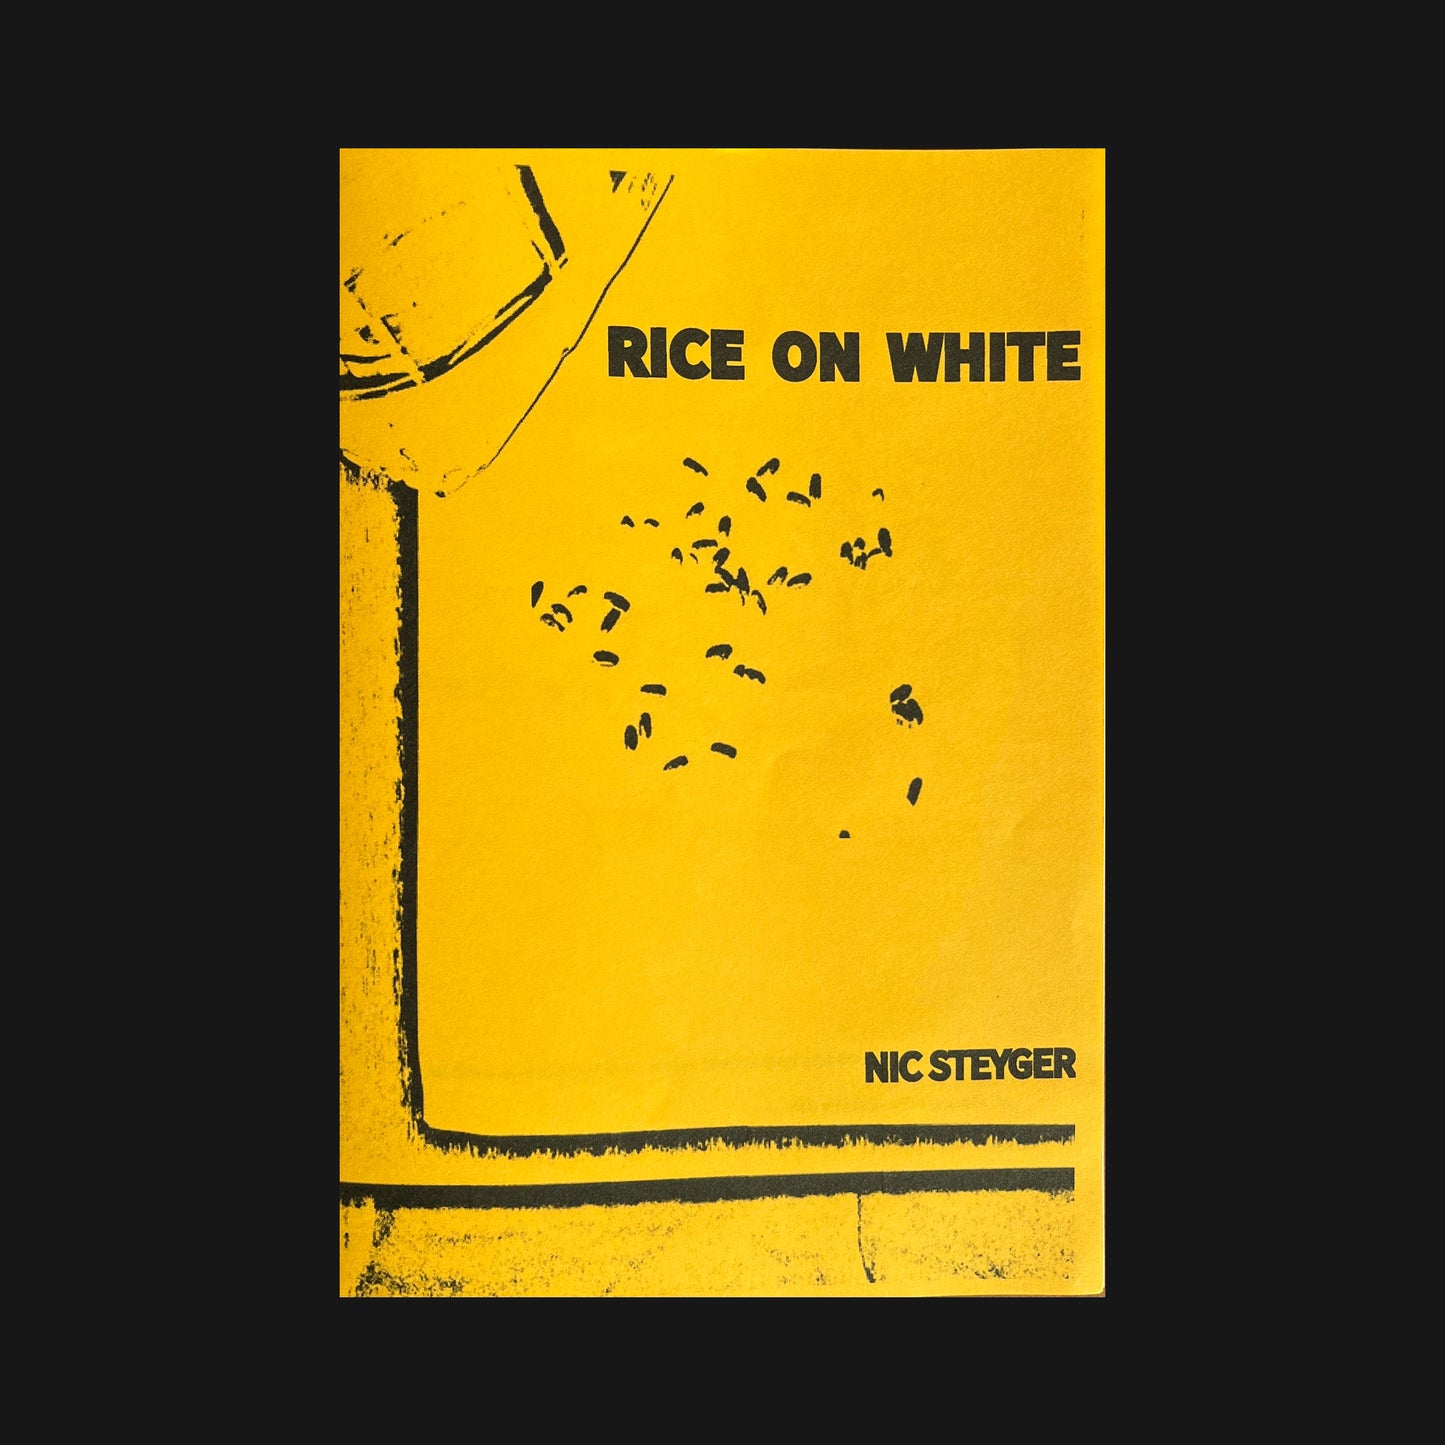 NIC STEYGER - "RICE ON WHITE" ZINE